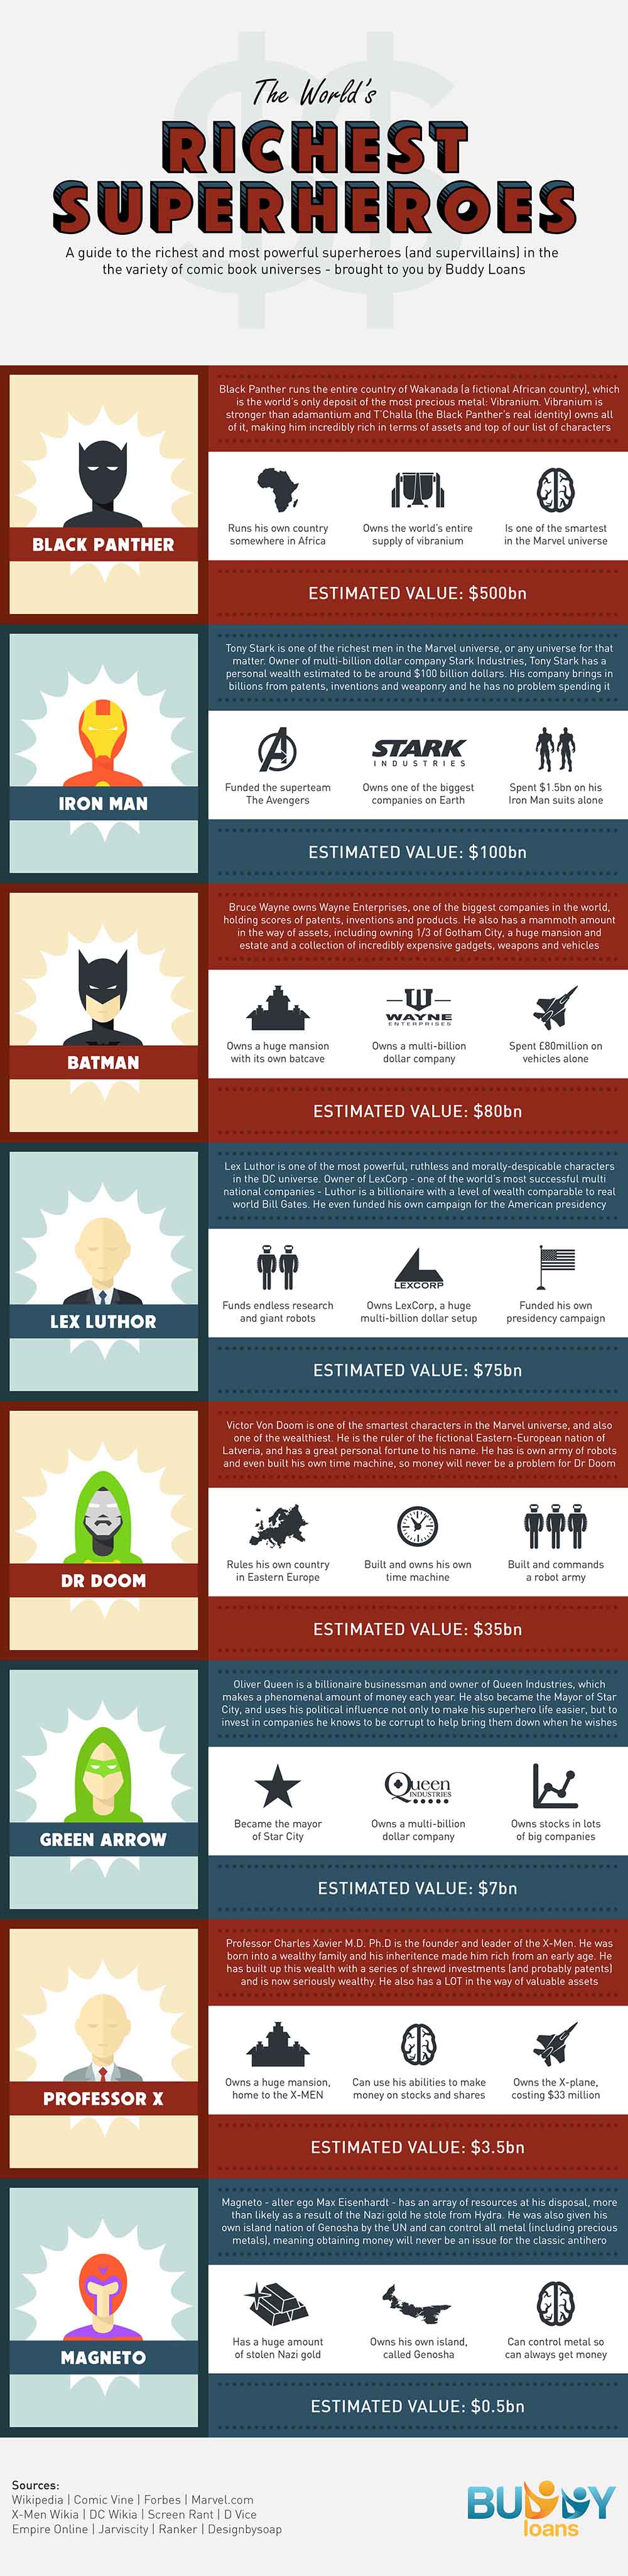 Richest Superheroes